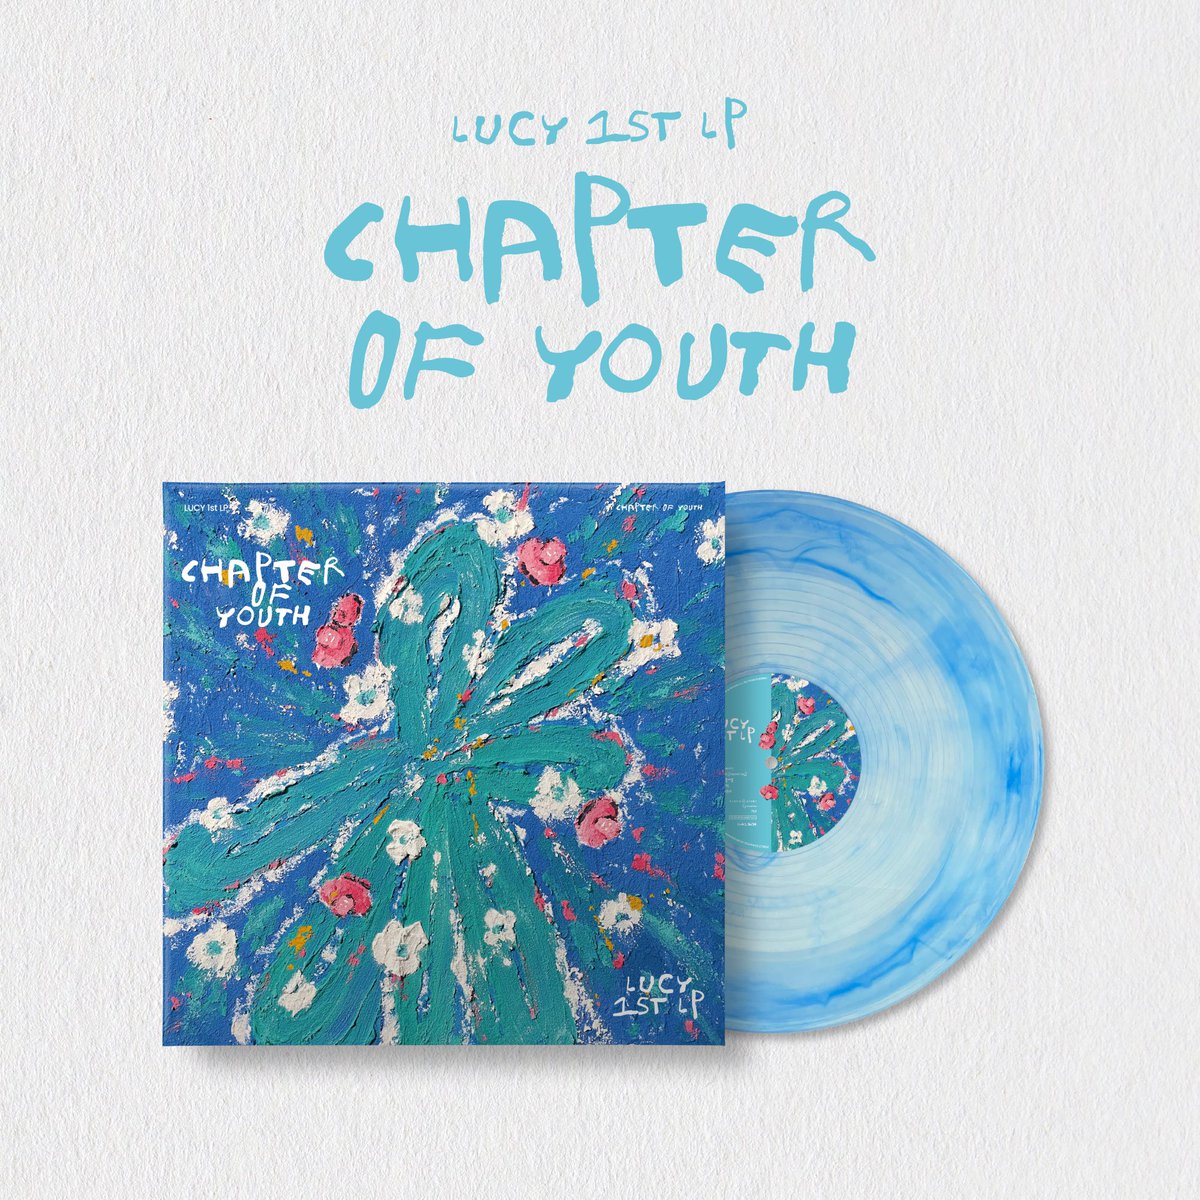 [#LUCY] 데뷔 4주년 기념 1st Compilation LP <Chapter of Youth> 발매 안내💐

📅예약판매 일시 : 2024.04.30 (TUE) 3PM 
📅배송 시작 예정일  : 2024.05.08 (WED) 

<𝑻𝒓𝒂𝒄𝒌 𝑳𝒊𝒔𝒕>
𝑆𝑖𝑑𝑒 𝐴💿
1. Opening
2. 개화 (Flowering)
3. 떼굴떼굴
4. 히어로
5. 아지랑이

𝑆𝑖𝑑𝑒 𝐵💿
1. 아니…